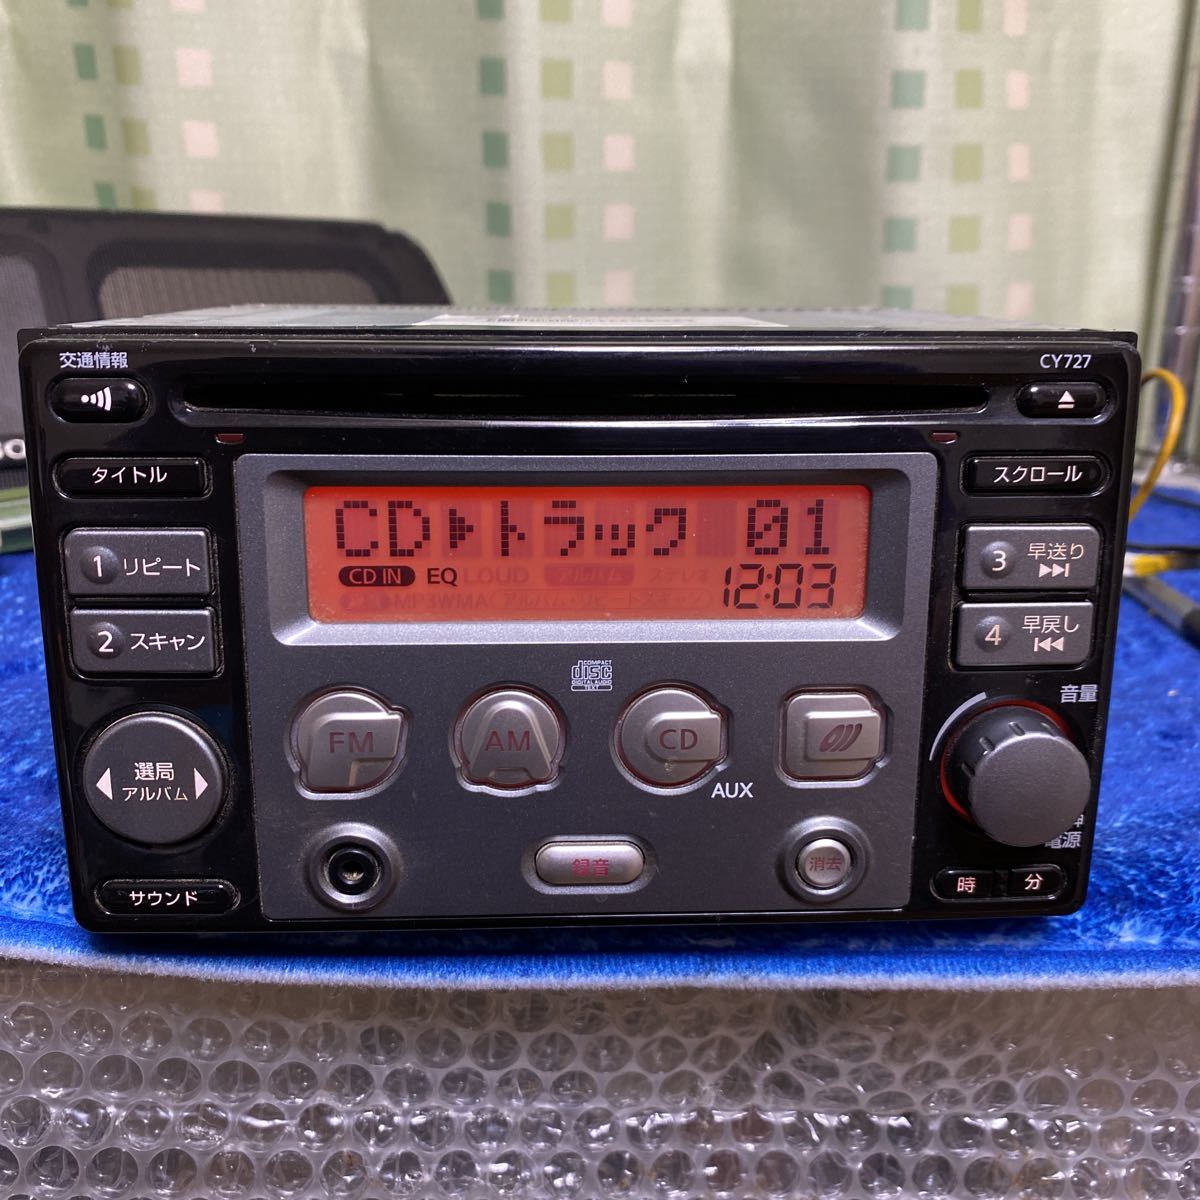  Nissan original CD player B8185-89902 CY727 recording function AUX